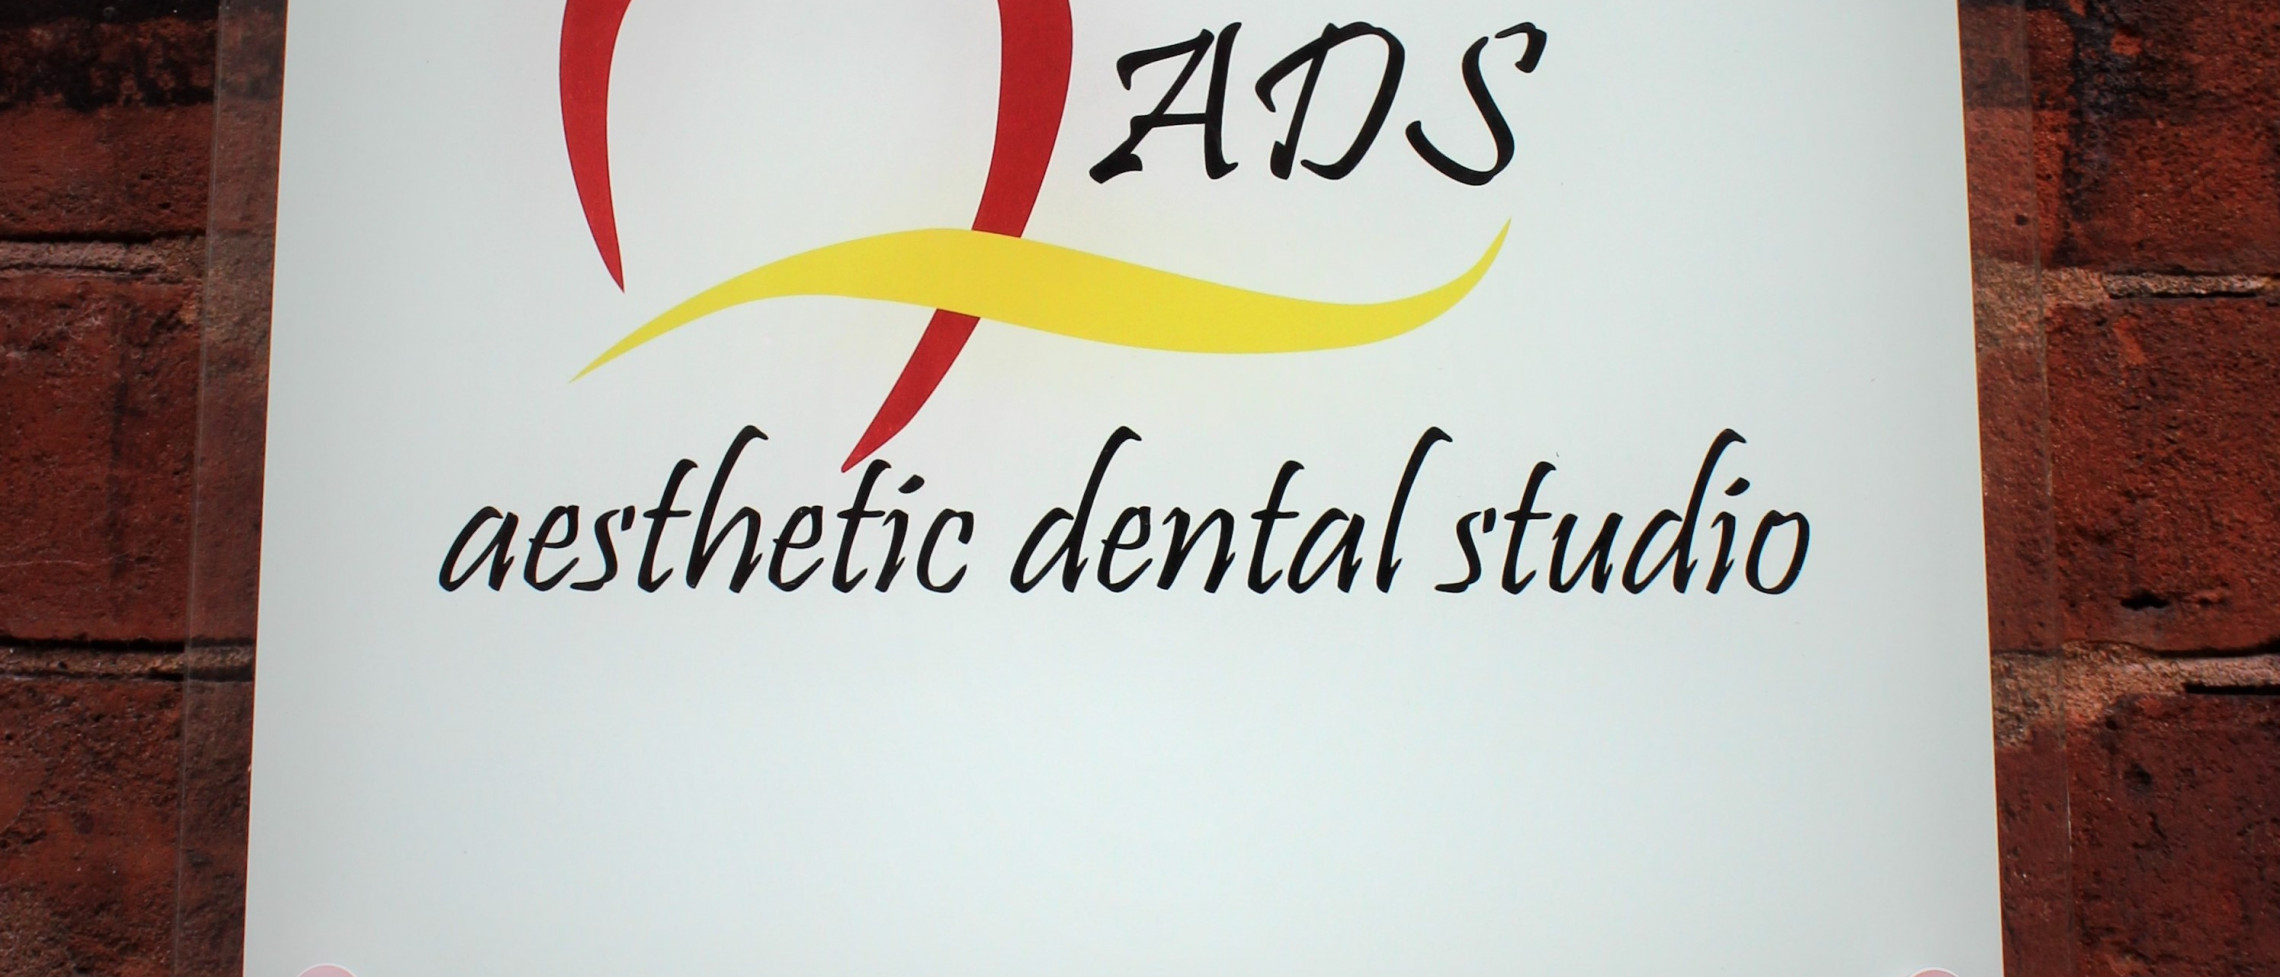 Aesthetic Dental Studio